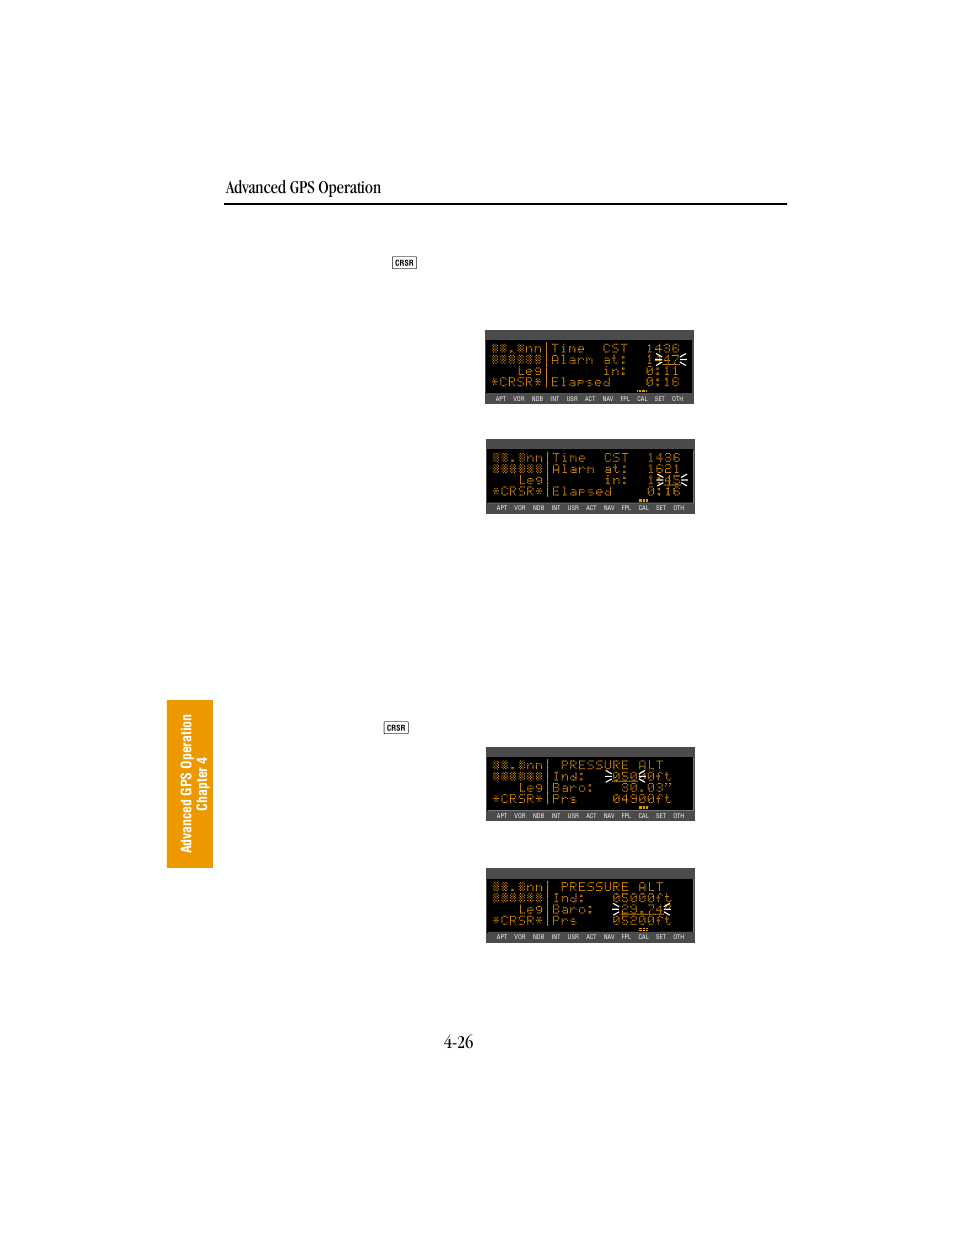 Advanced gps operation 4-26 | BendixKing KLN 89B - Pilots Guide User Manual | Page 137 / 246